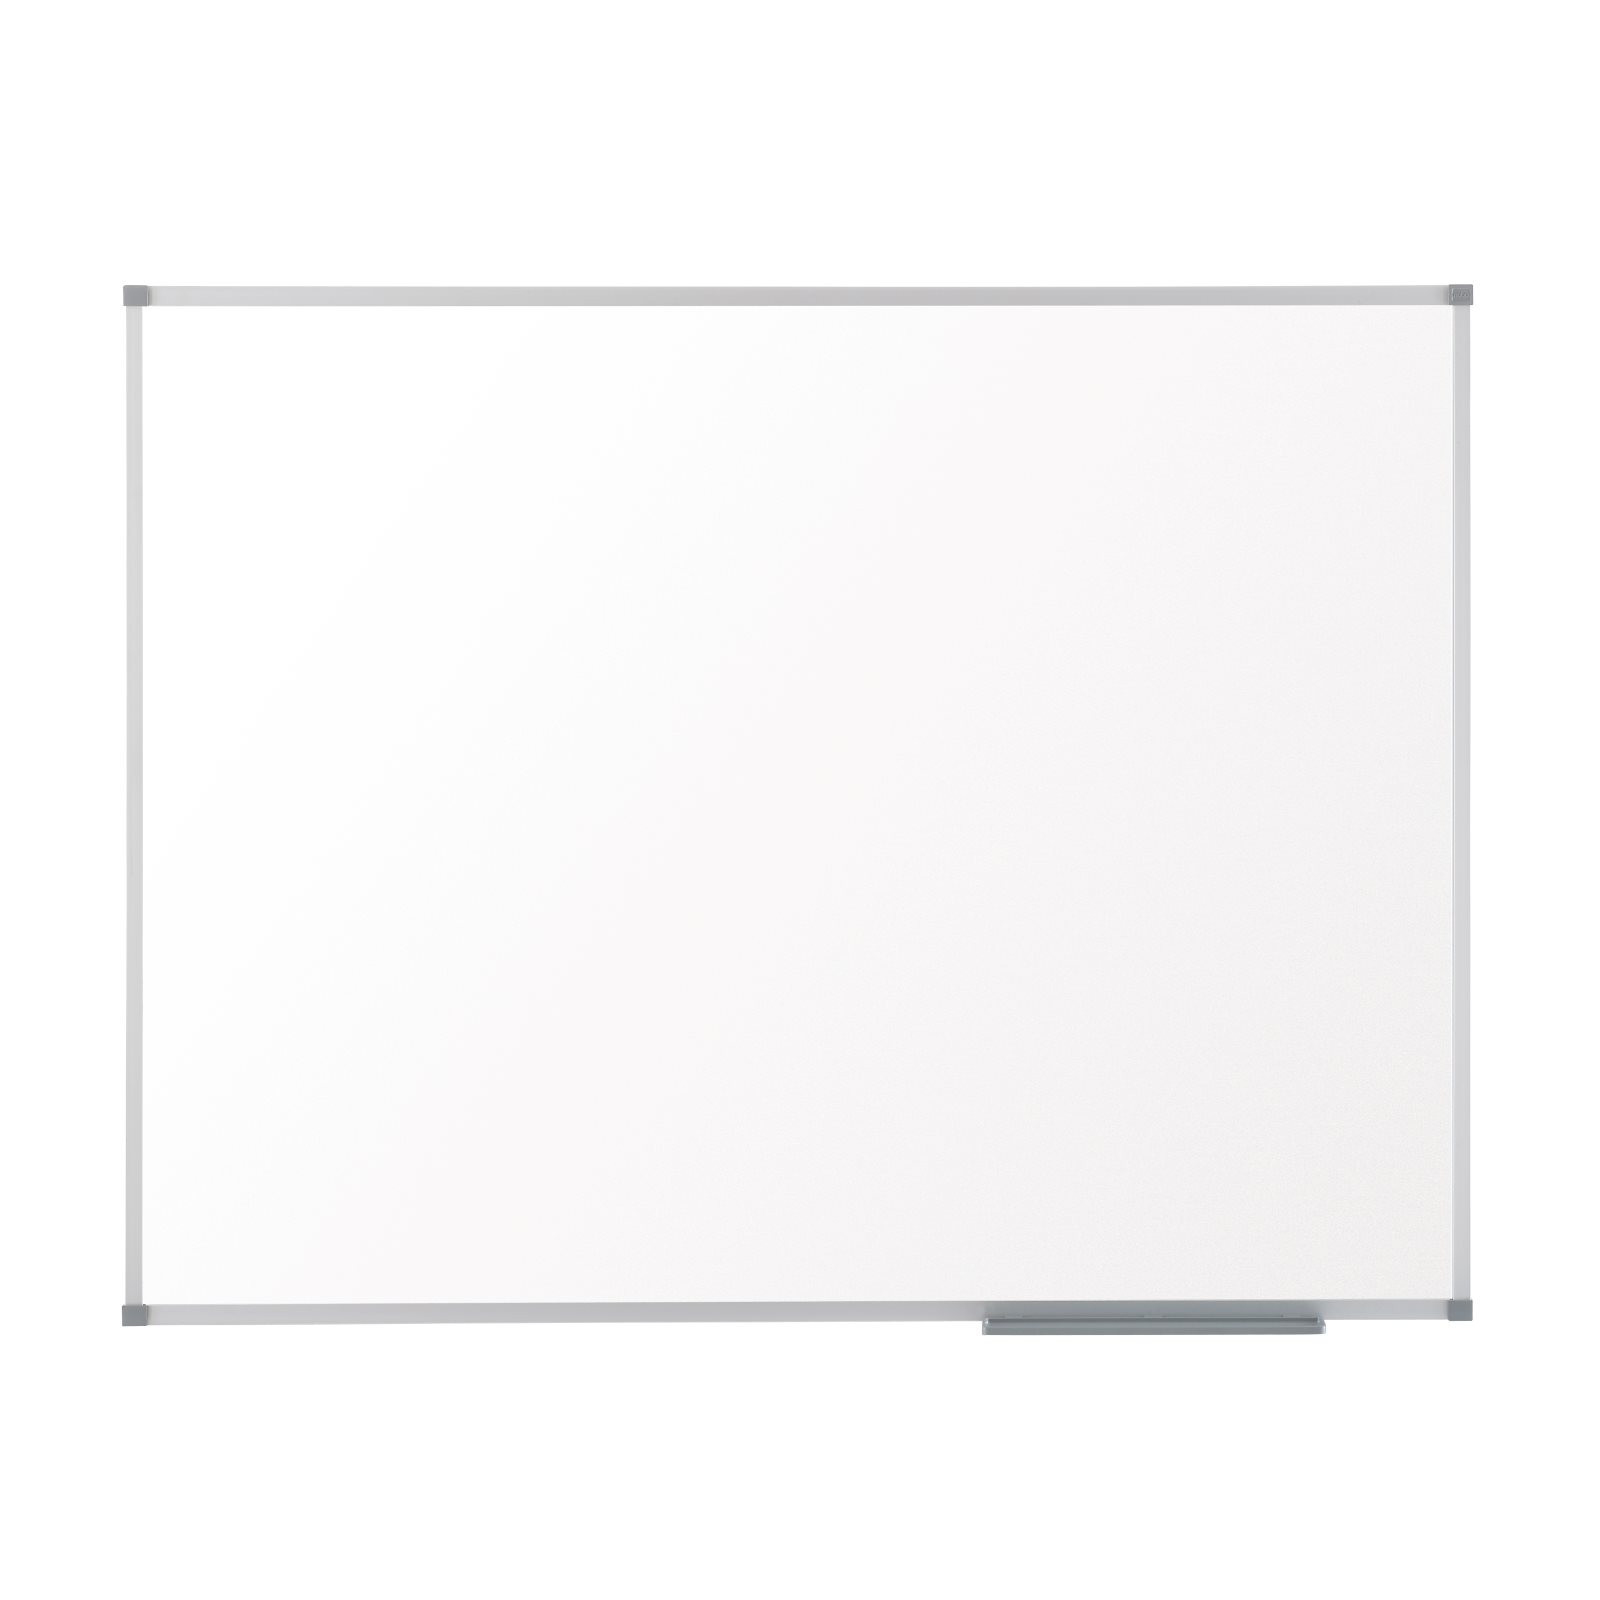 Photos - Dry Erase Board / Flipchart Nobo Basic Steel Magnetic Whiteboard 1500x1000mm with Basic Trim 1905212 